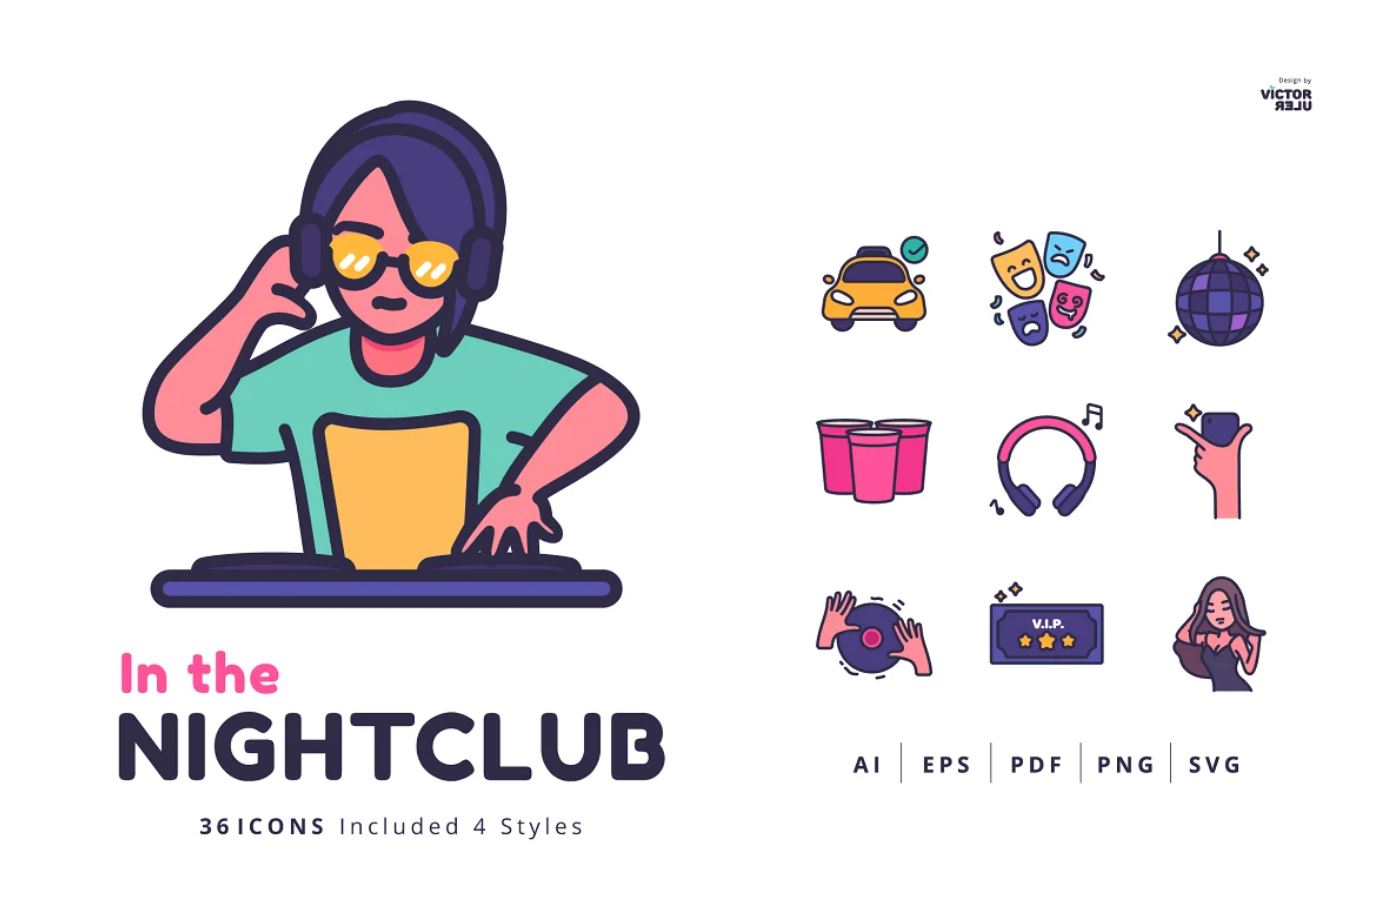 Nightclub-Icons-nightlife